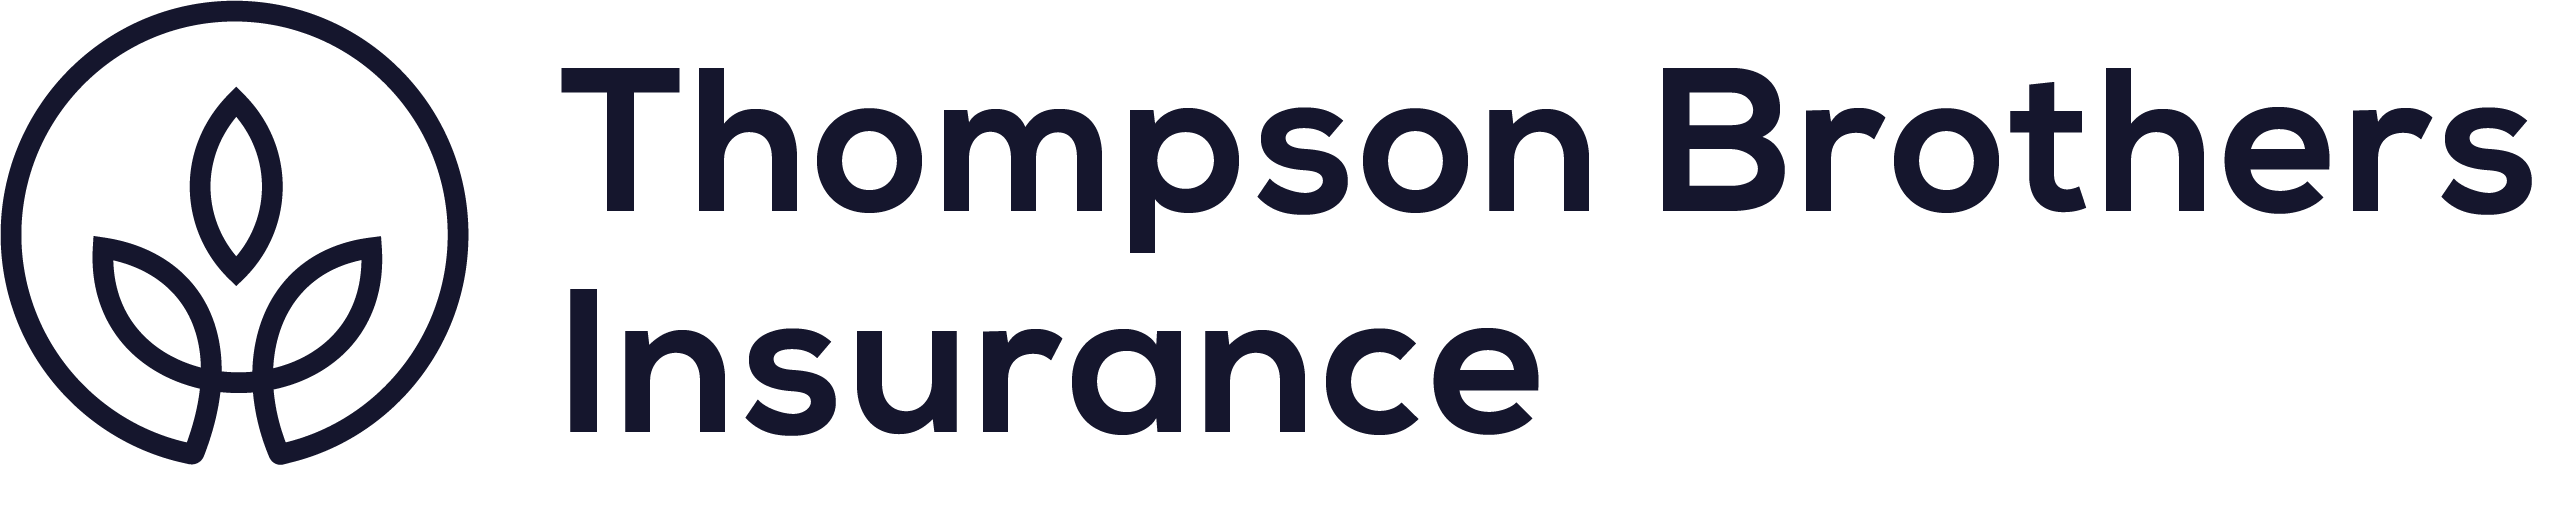 GRP logo image